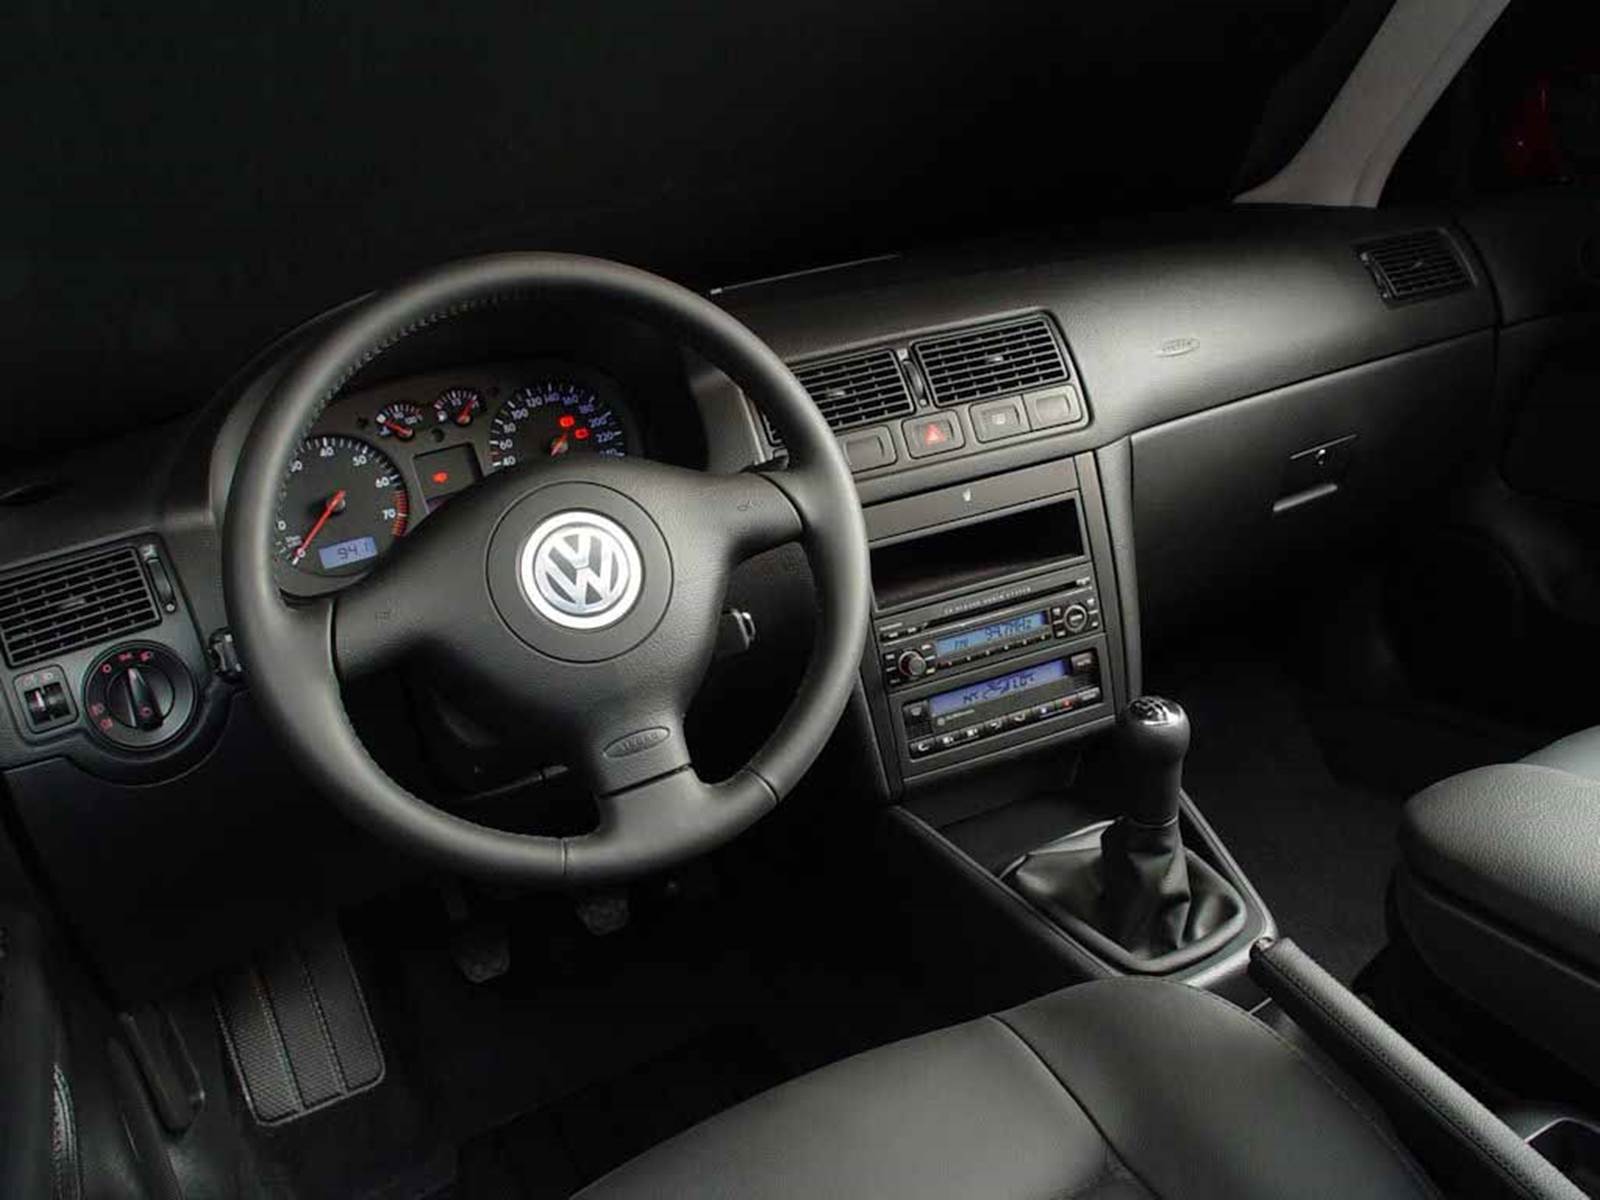 VW Golf Sport 2005 1.8 Turbo - interior